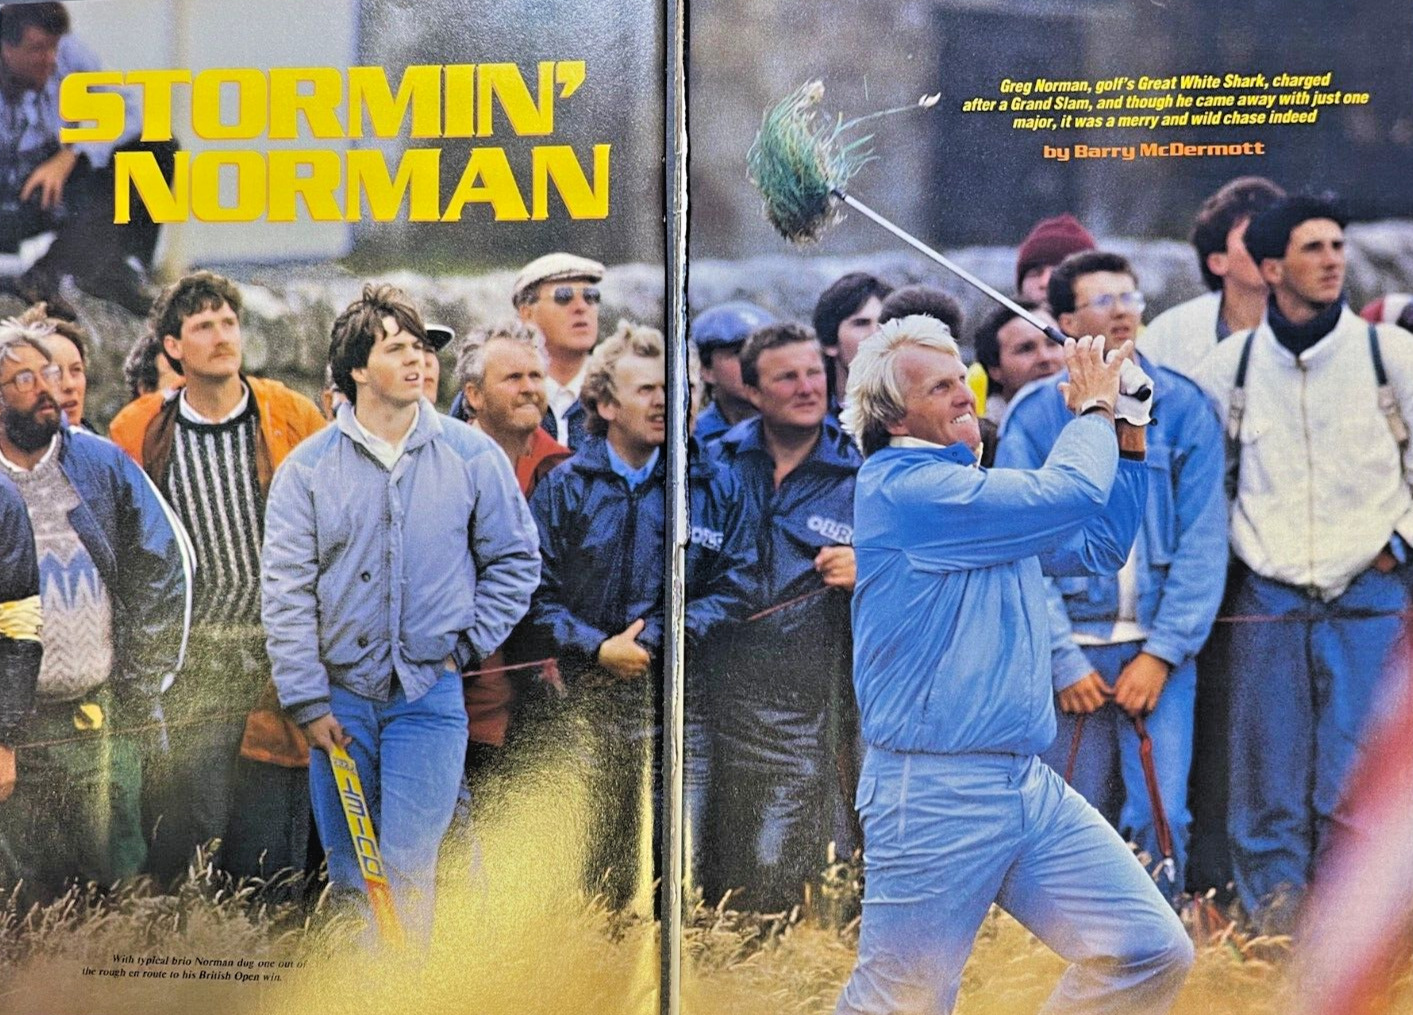 1986 Golfer Greg Norman illustrated